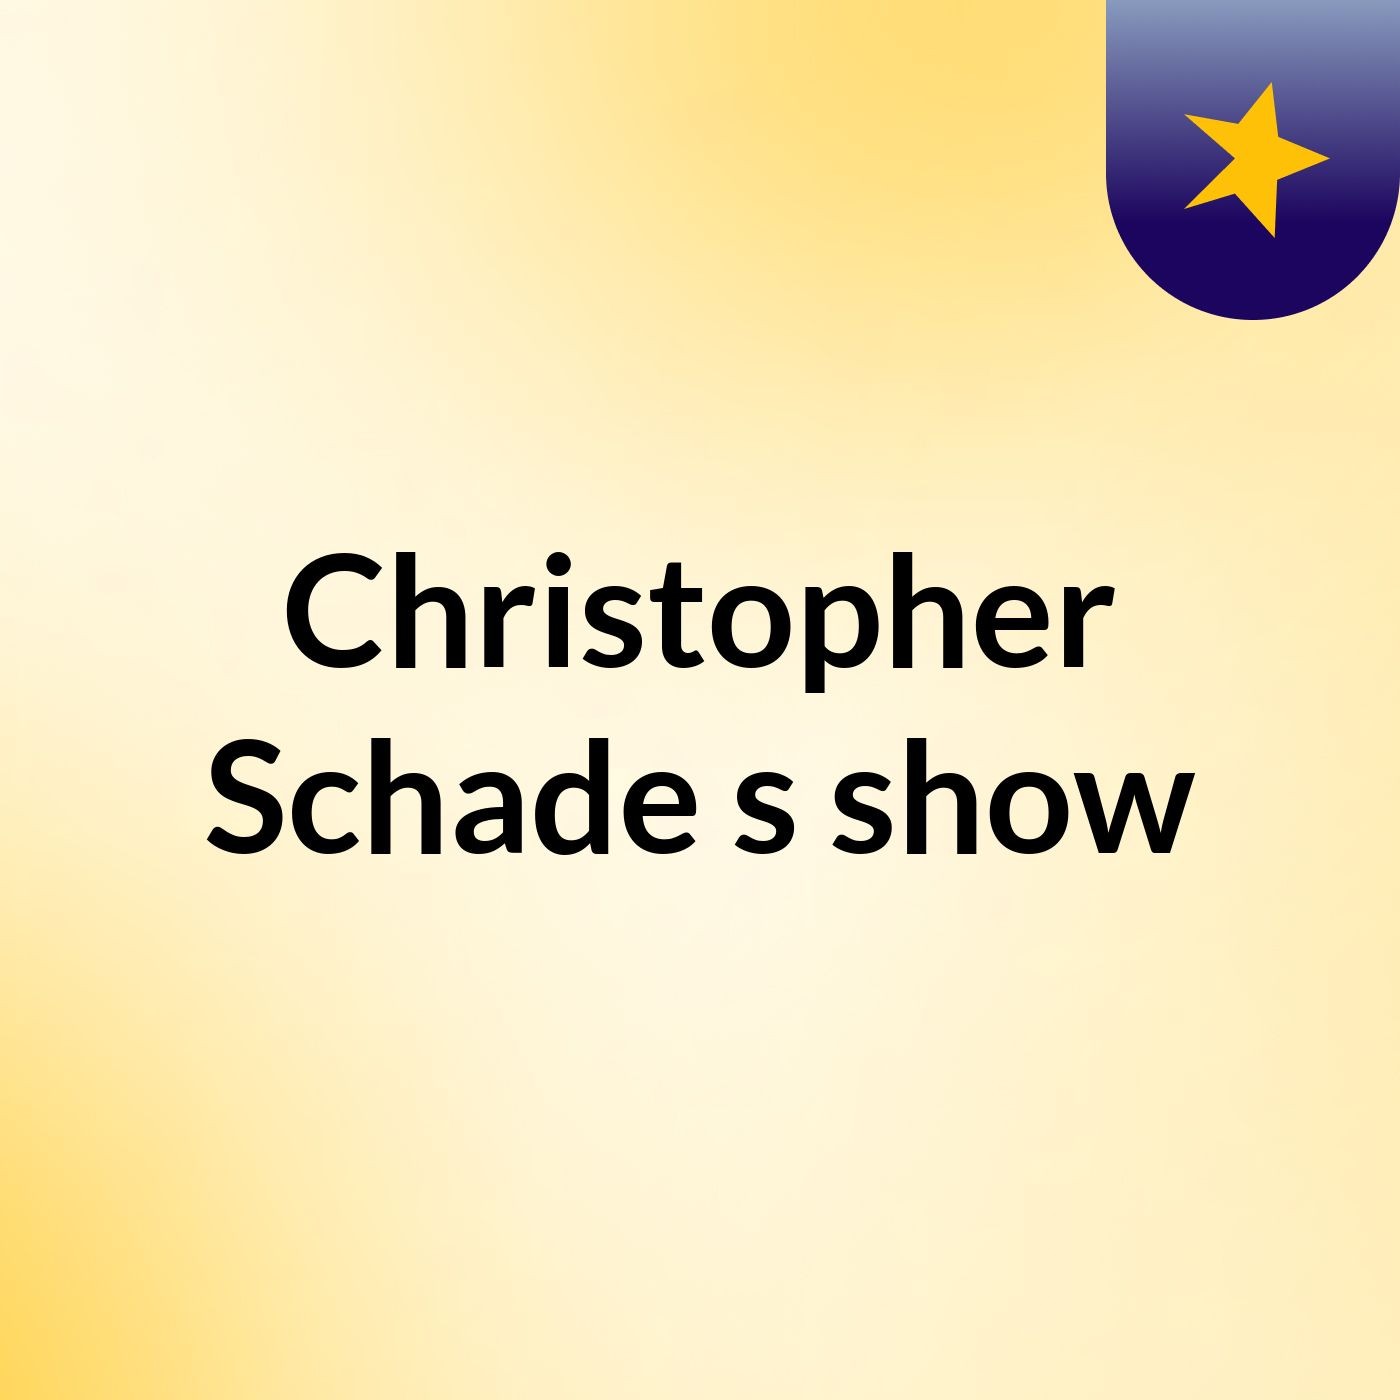 Christopher Schade's show